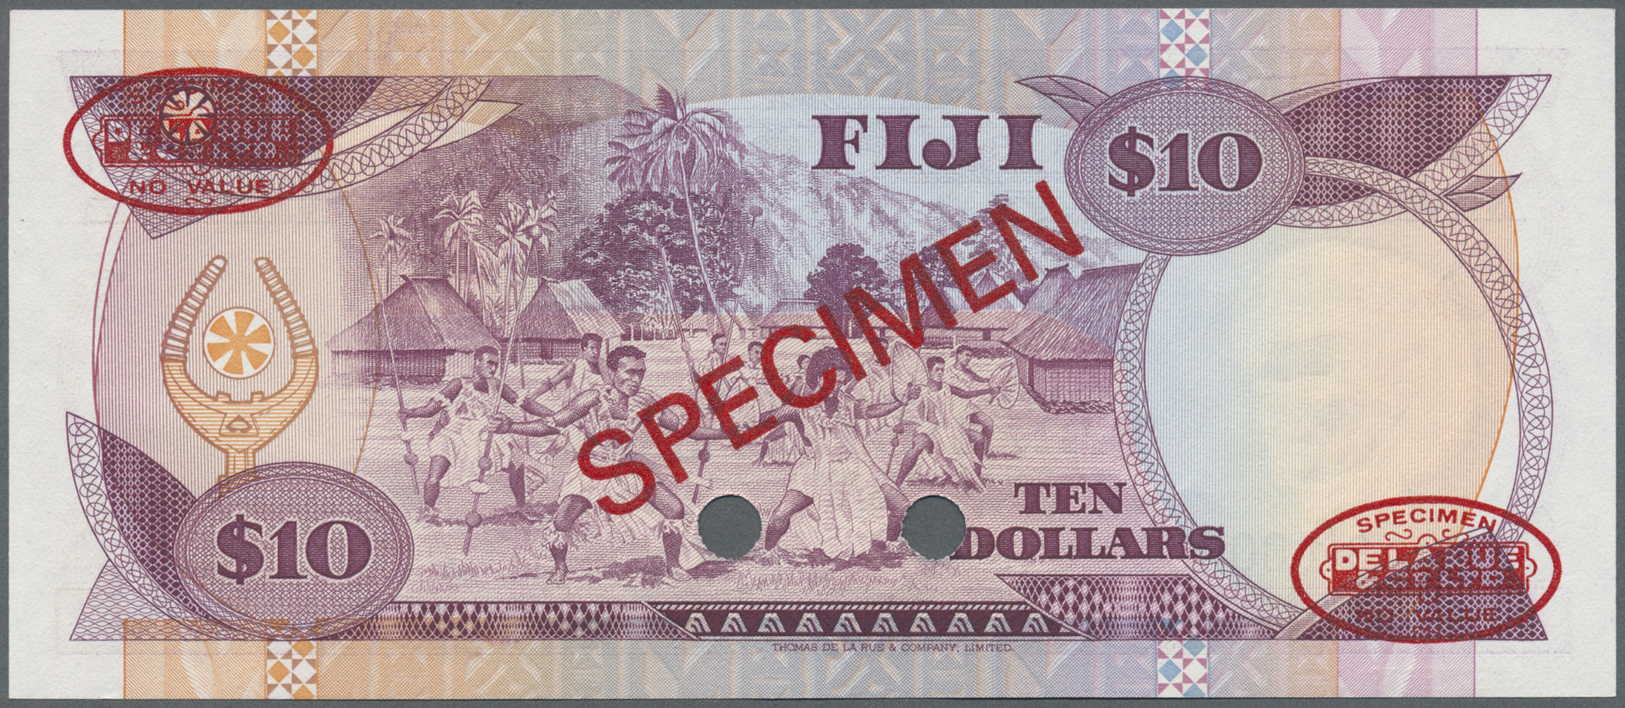 00777 Fiji: 10 Dollars 1980 Specimen P. 79s1 In Condition: UNC. - Fiji